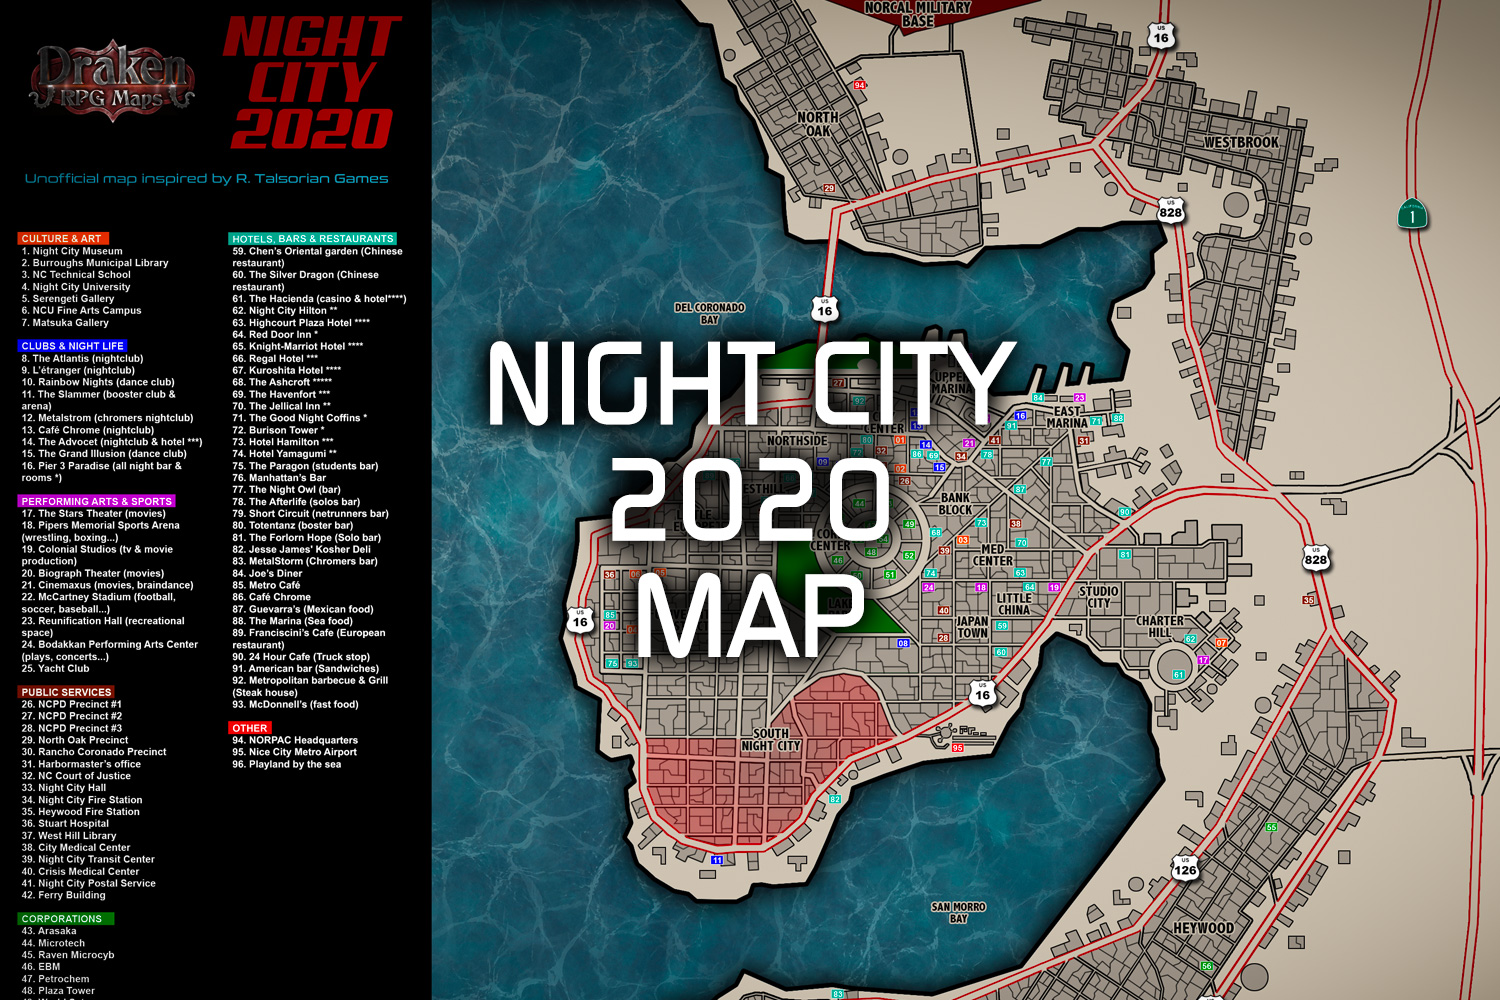 NIGHT CITY 2020 MAP